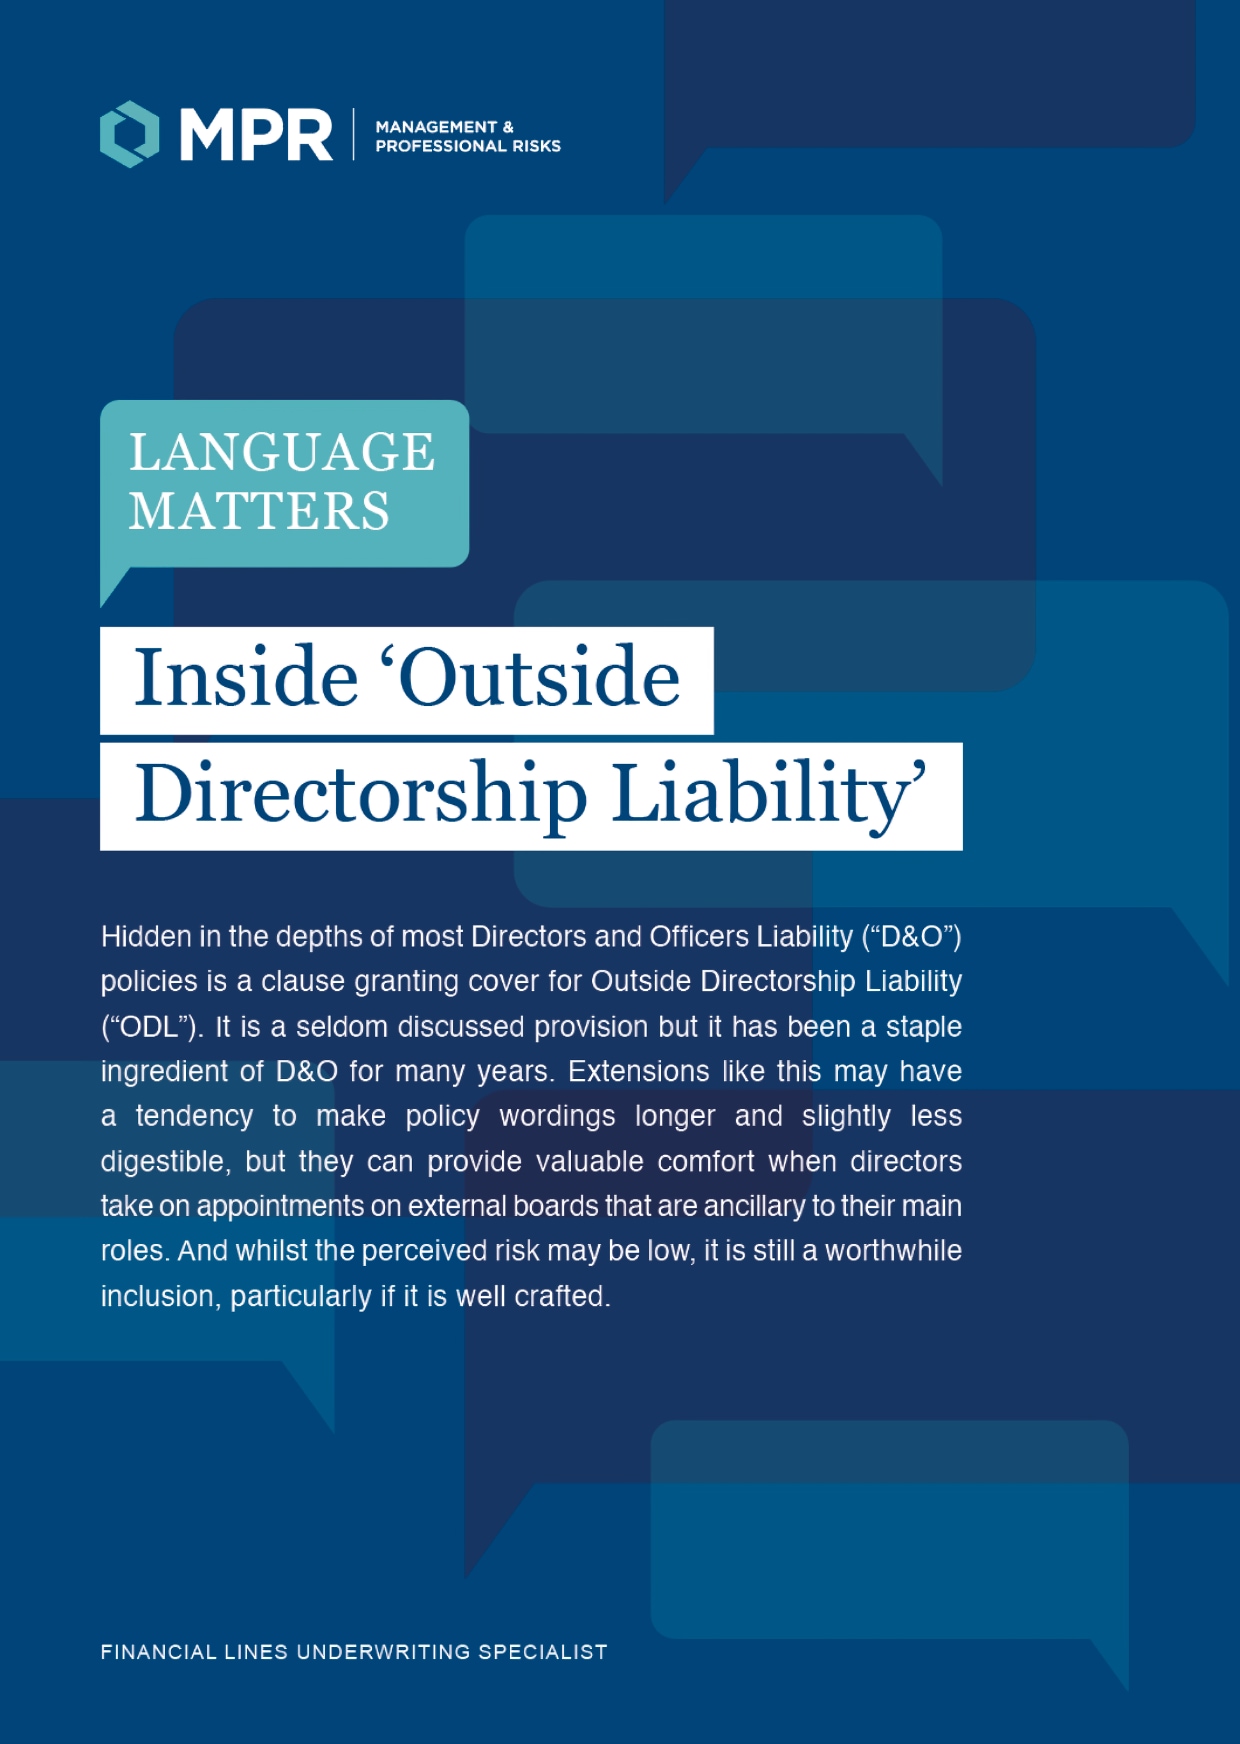 Cover of Inside 'Outside Directorship Liability' brochure